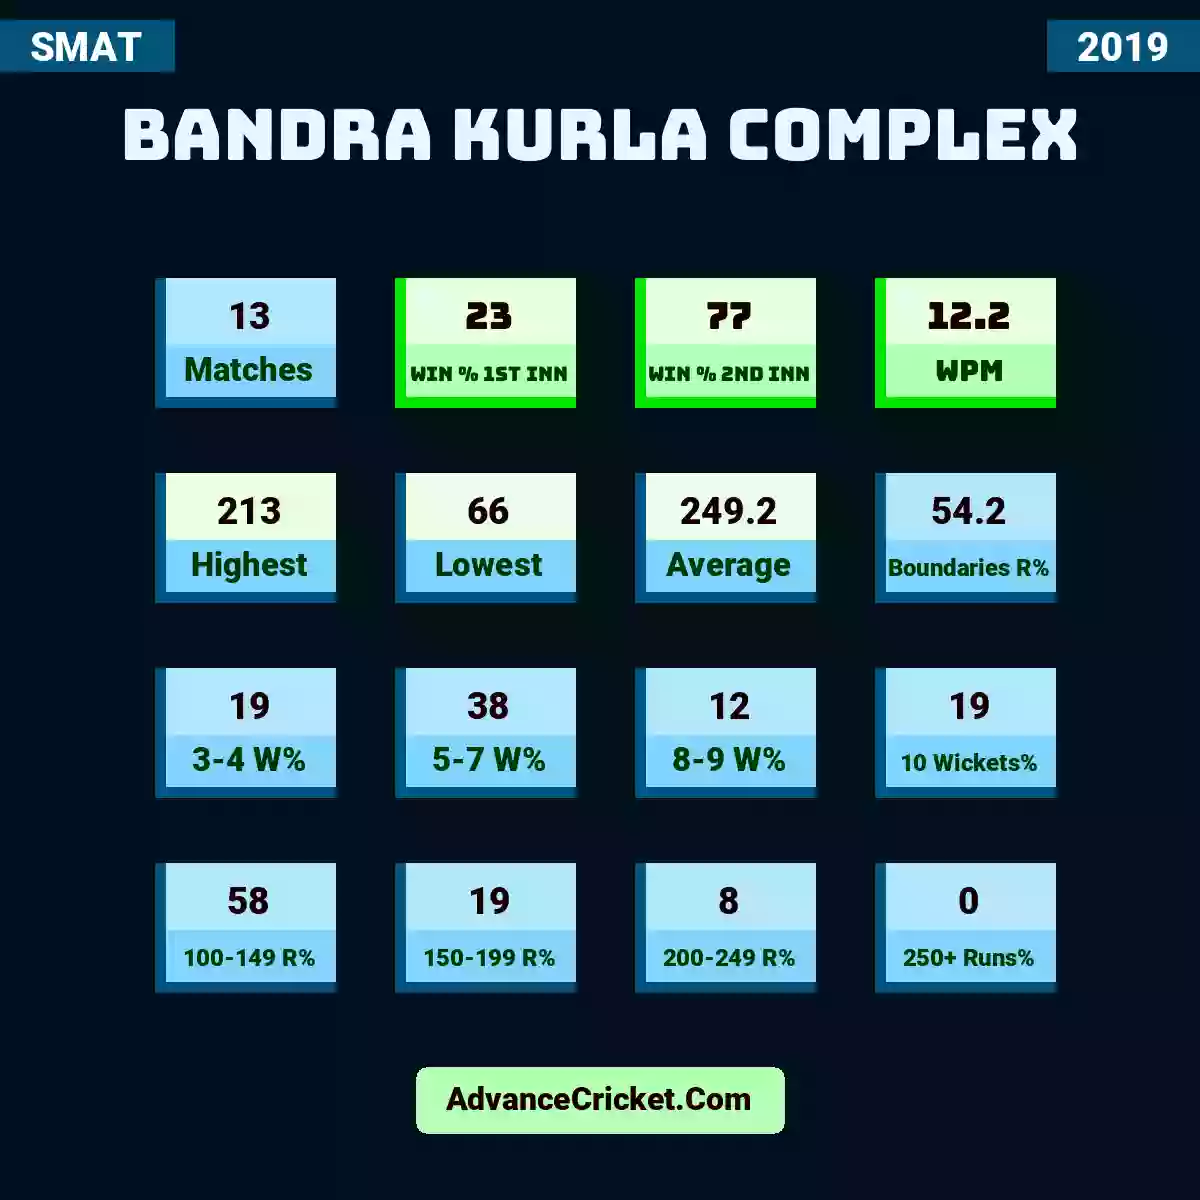 Image showing Bandra Kurla Complex with Matches: 13, Win % 1st Inn: 23, Win % 2nd Inn: 77, WPM: 12.2, Highest: 213, Lowest: 66, Average: 249.2, Boundaries R%: 54.2, 3-4 W%: 19, 5-7 W%: 38, 8-9 W%: 12, 10 Wickets%: 19, 100-149 R%: 58, 150-199 R%: 19, 200-249 R%: 8, 250+ Runs%: 0.